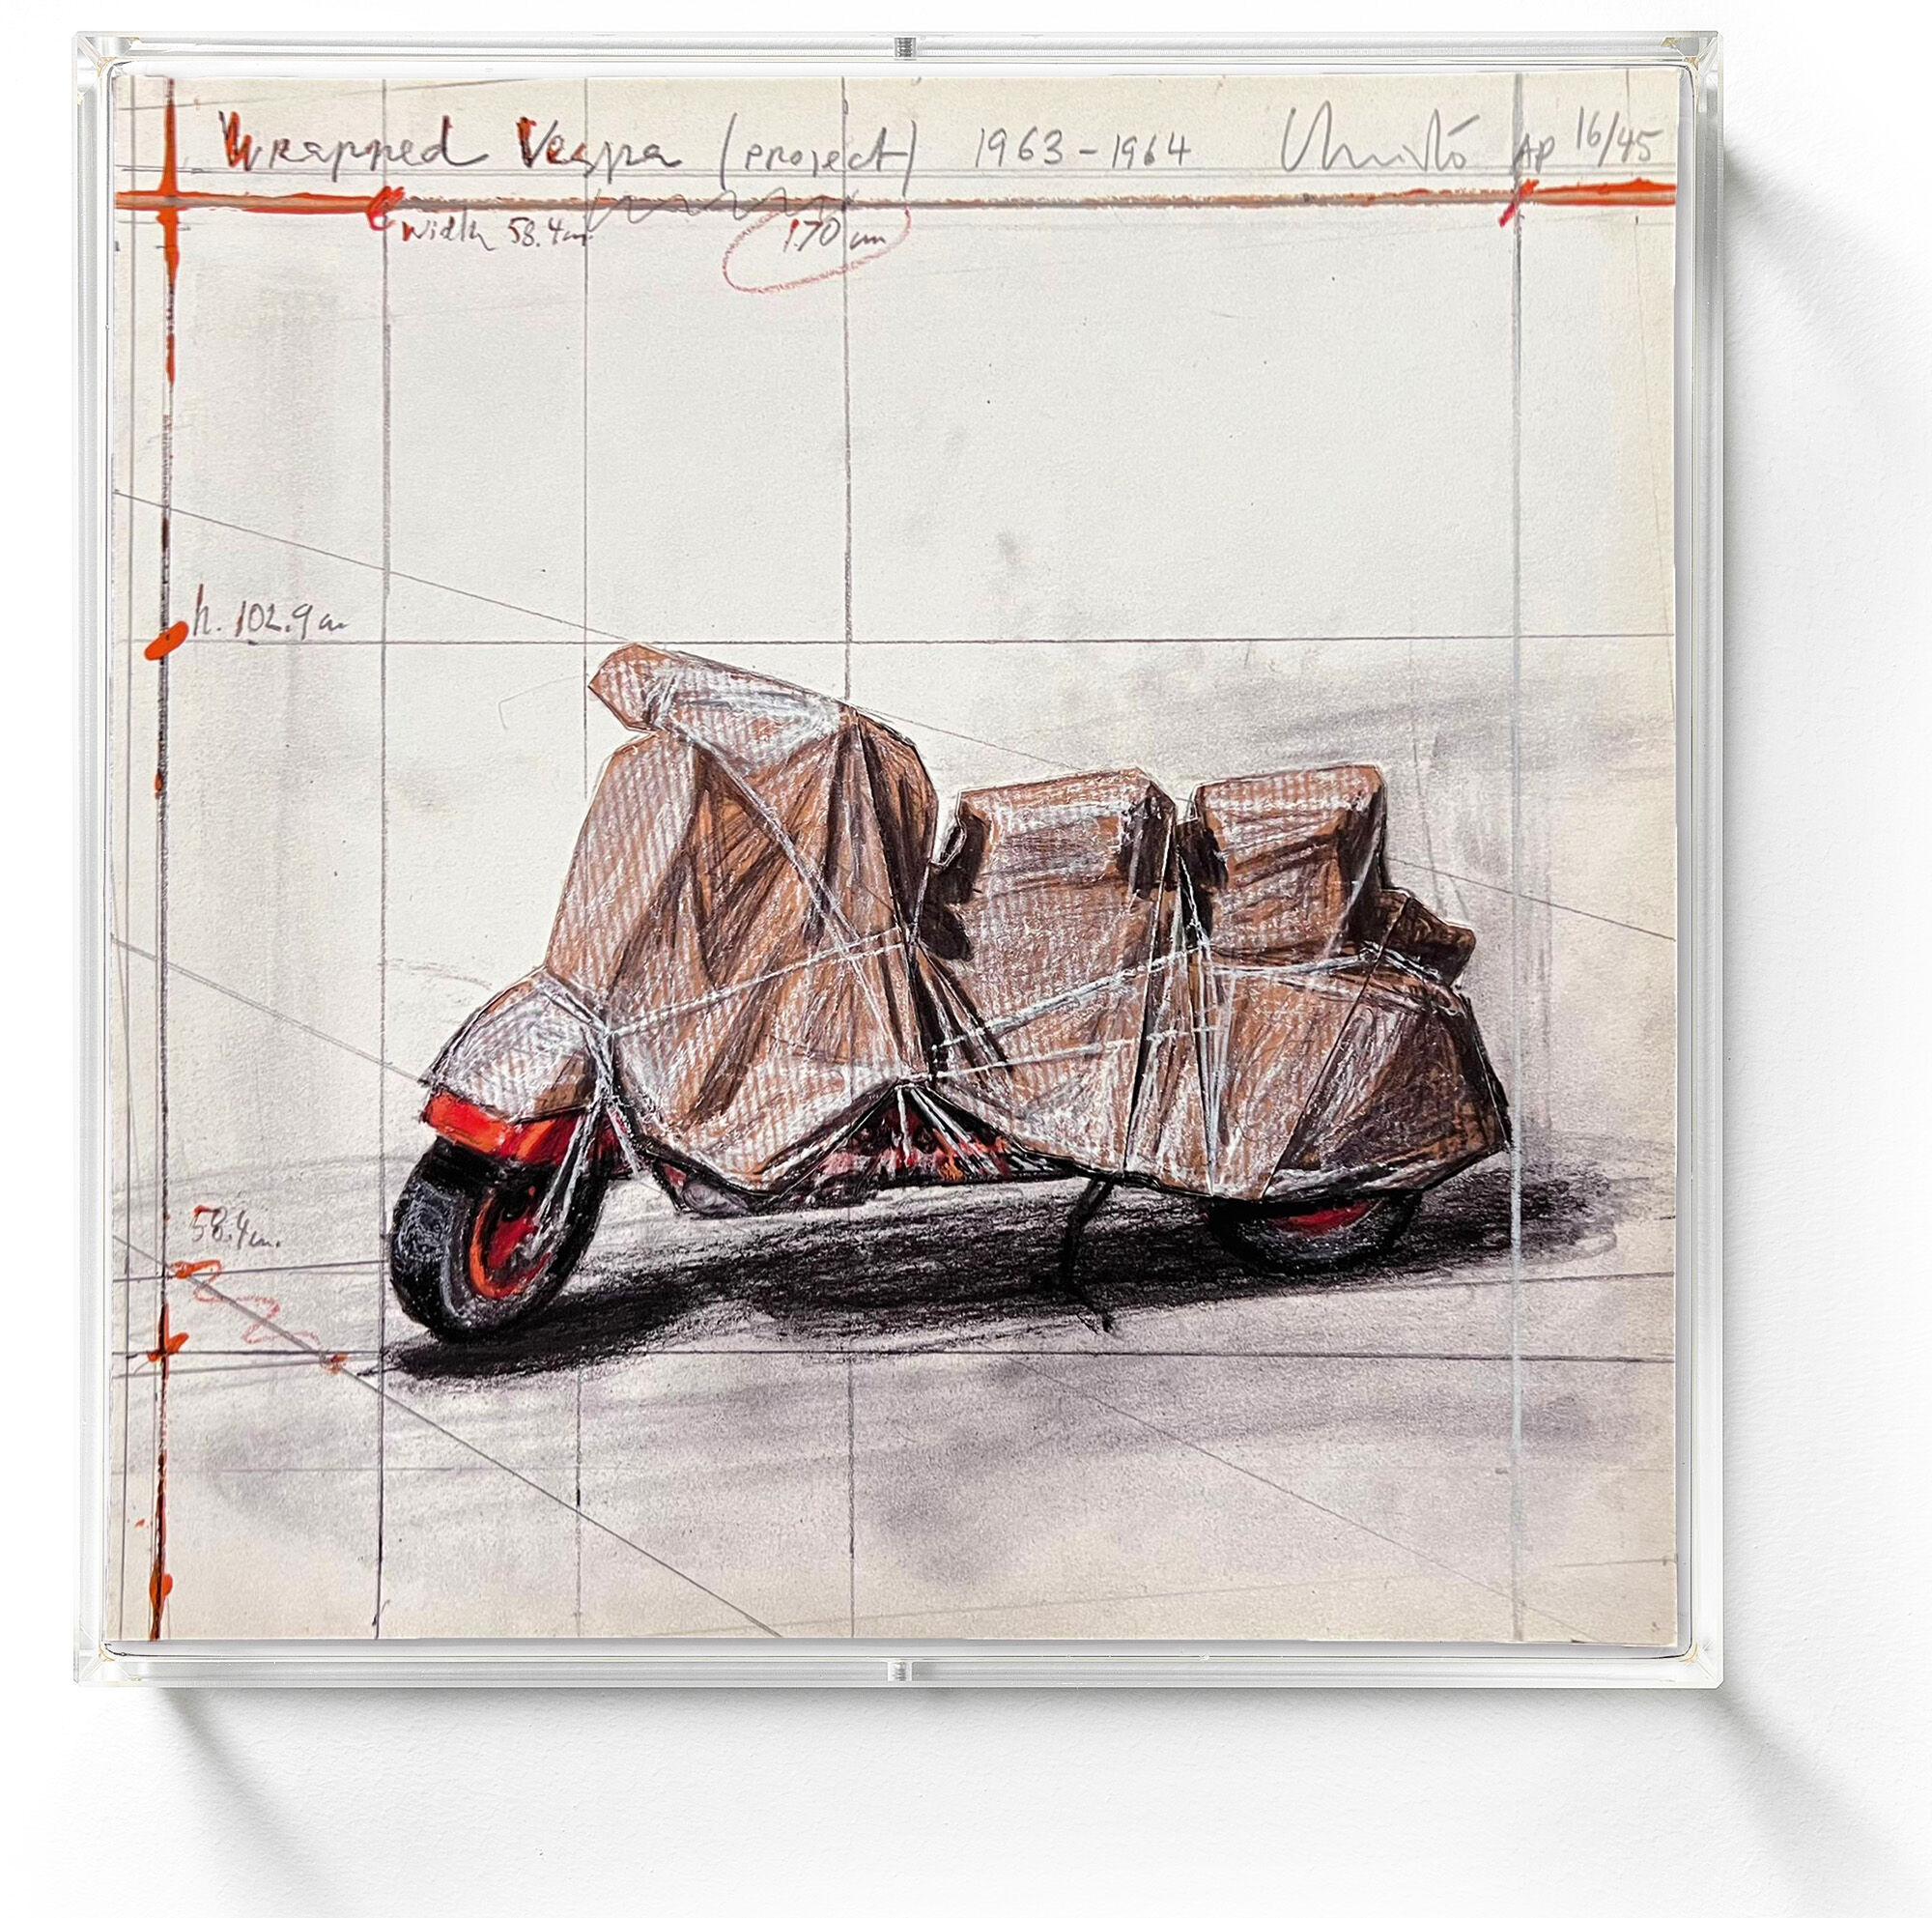 Bild "Wrapped Vespa" (2009) von Christo